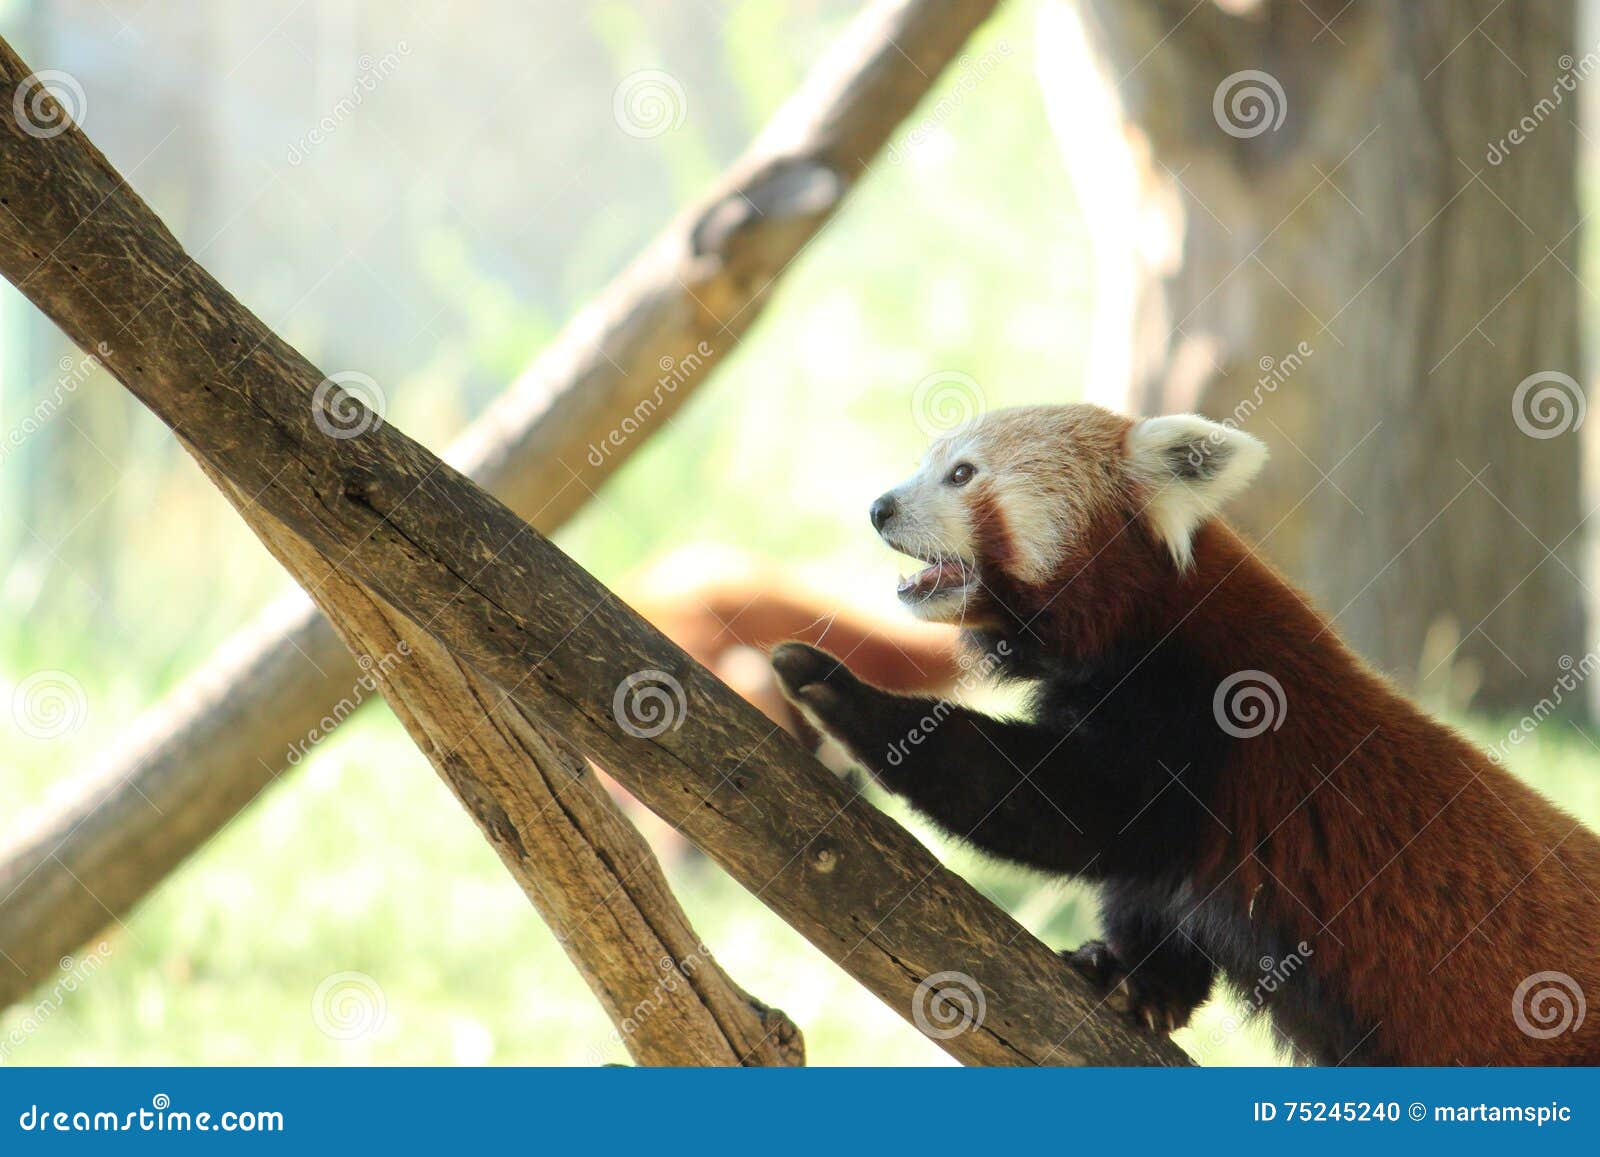 red panda climbing a tree